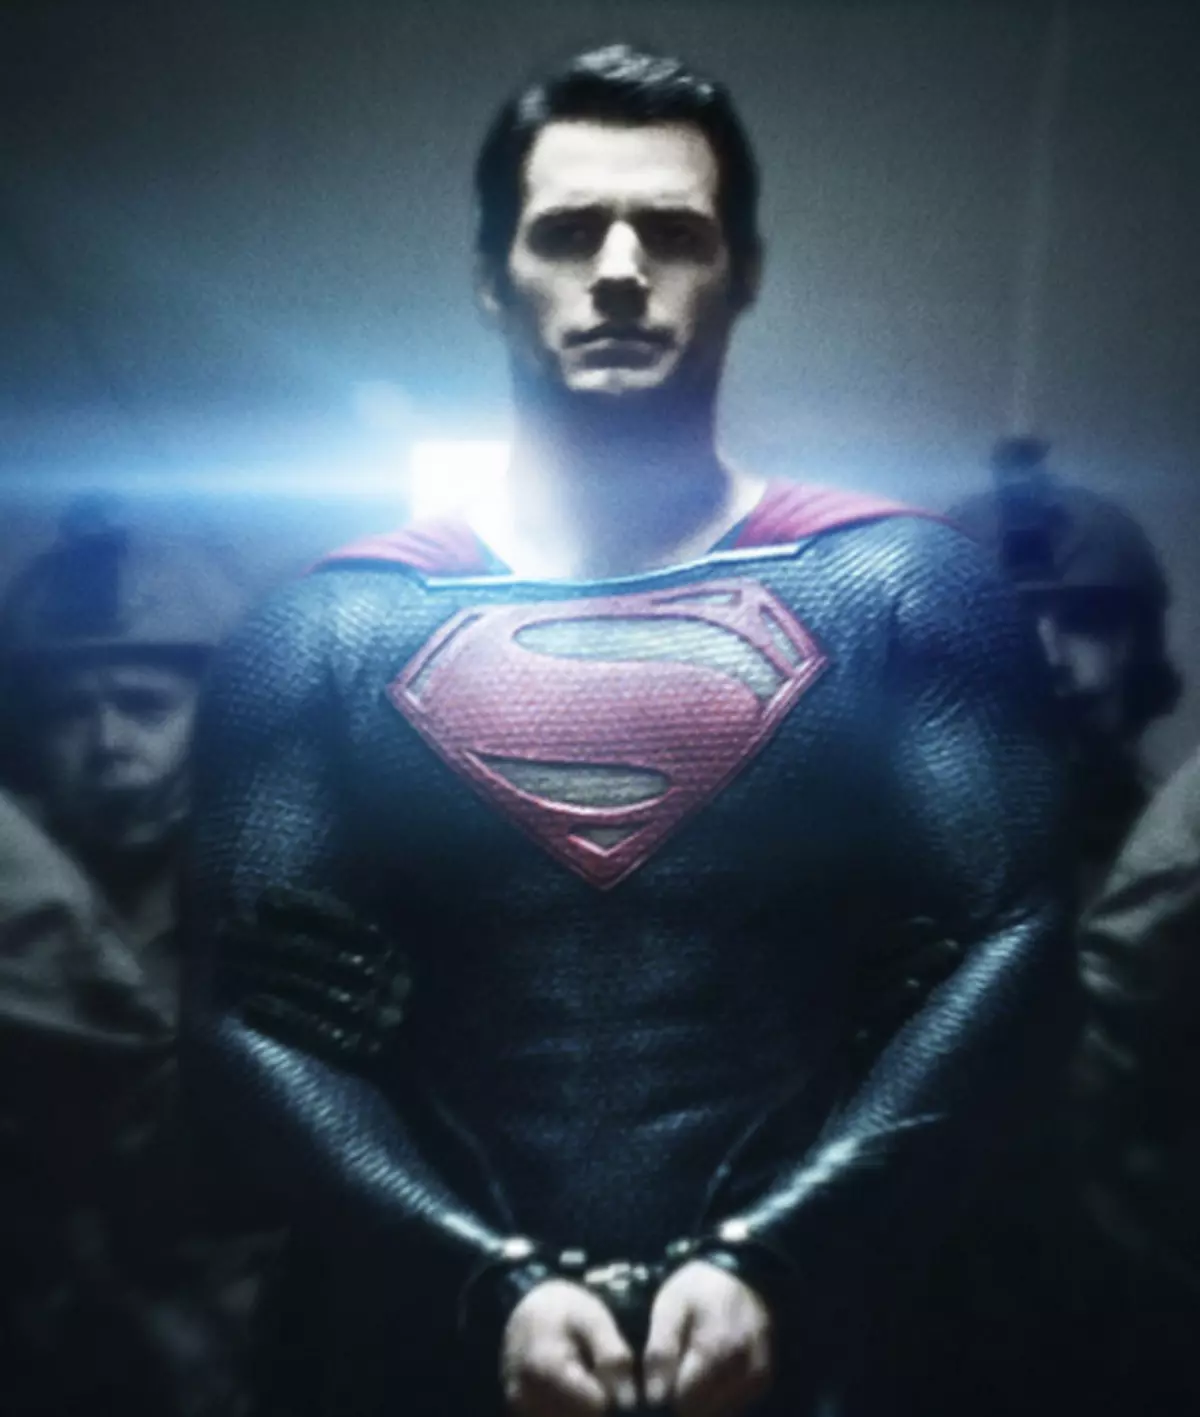 New Superman Movie “Man of Steel” Trailer Released